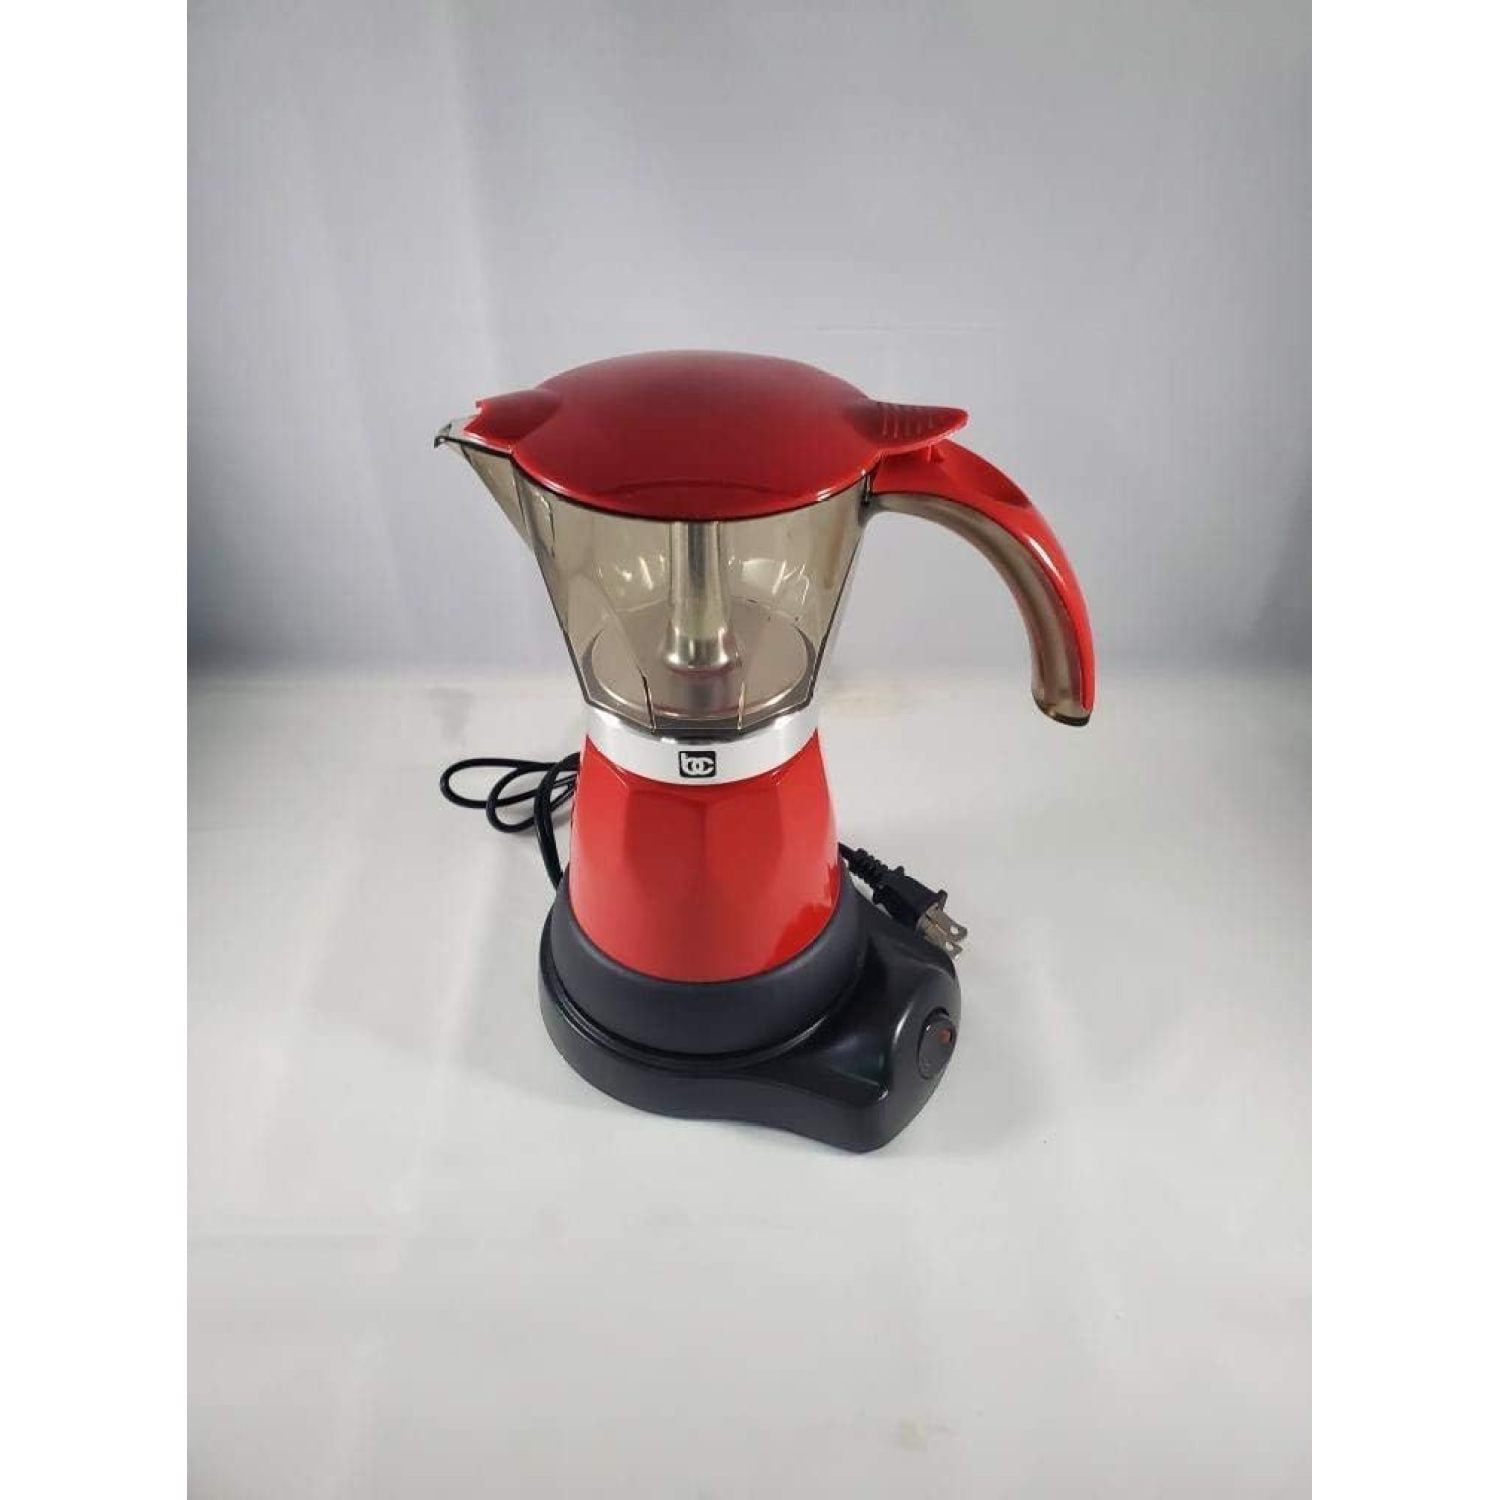  Mixpresso Dolce Gusto Machine, Latte Machine Red & Black  Cappuccino Machine Compatible With Nescafe Dolce Gusto, Red Coffee Maker:  Home & Kitchen